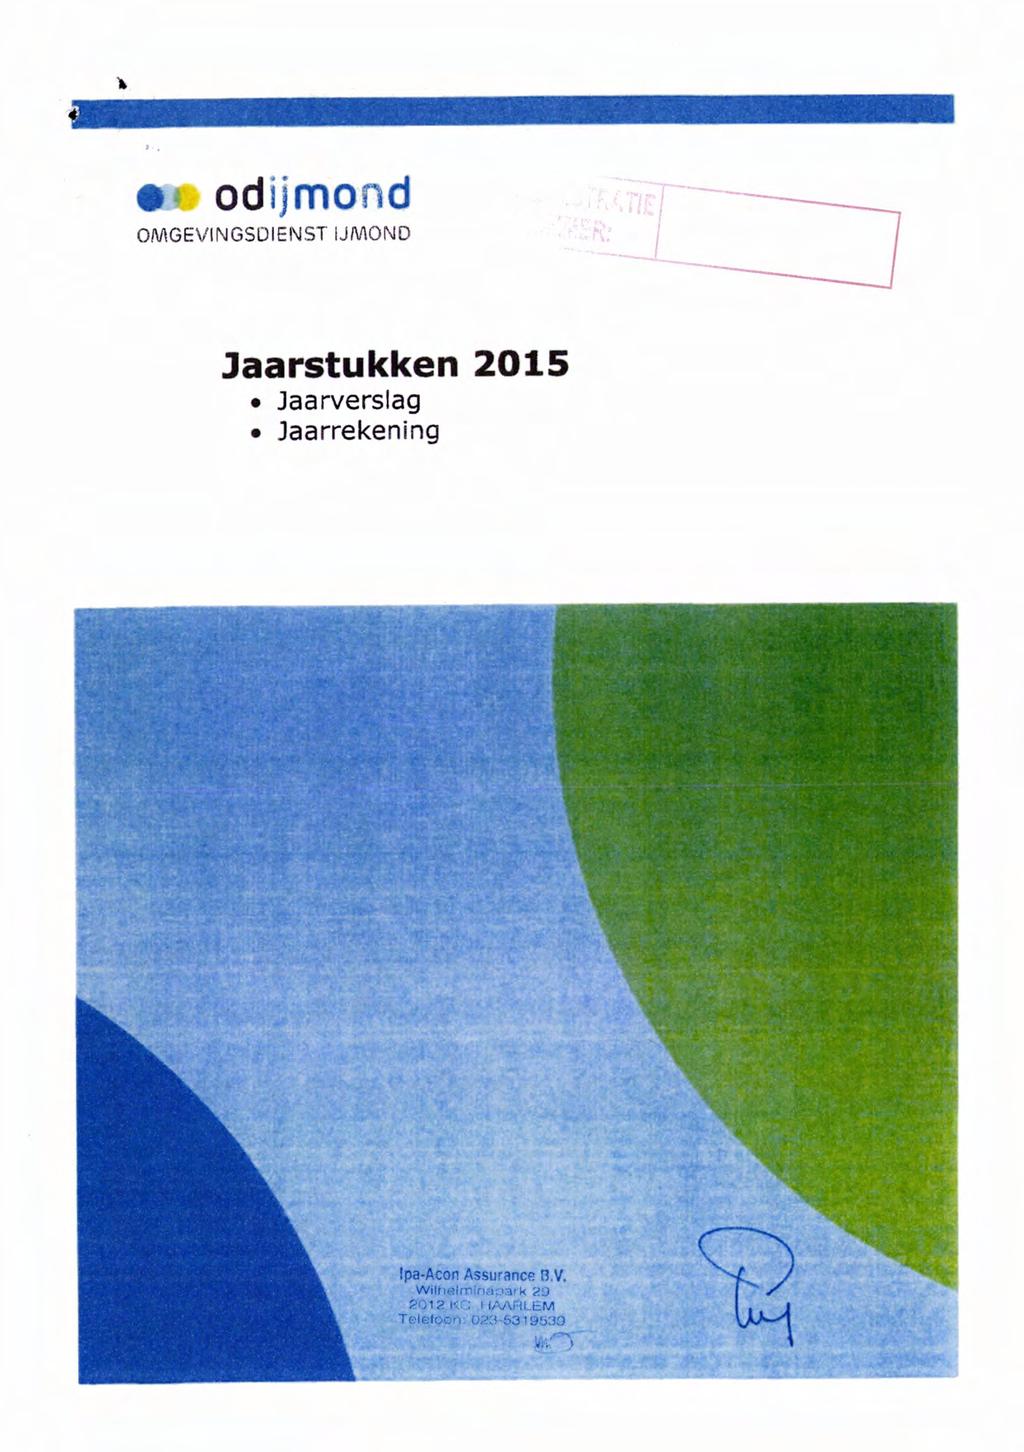 odijmond Jaarstukken 2015 Jaarverslag